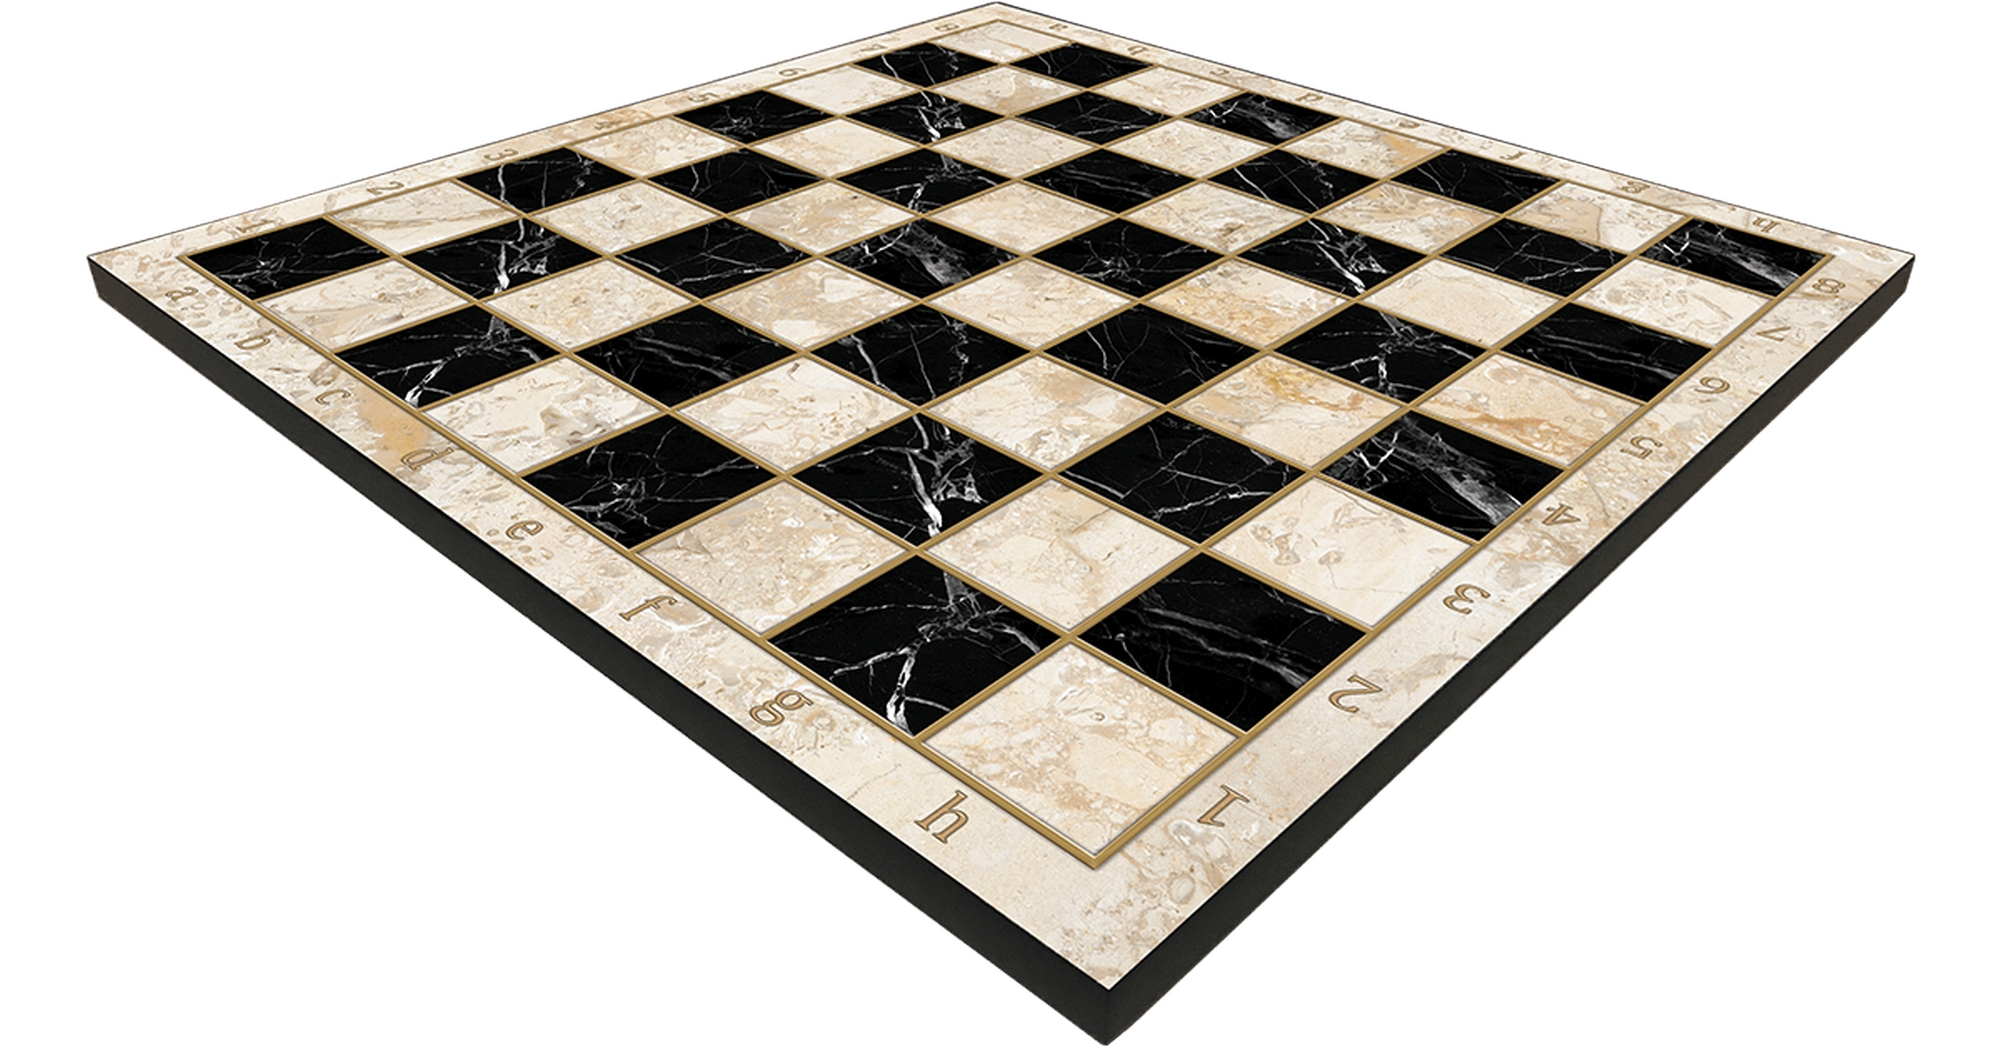 Шахматная доска Черный-Бежевый, Турция Yenigun B00201001